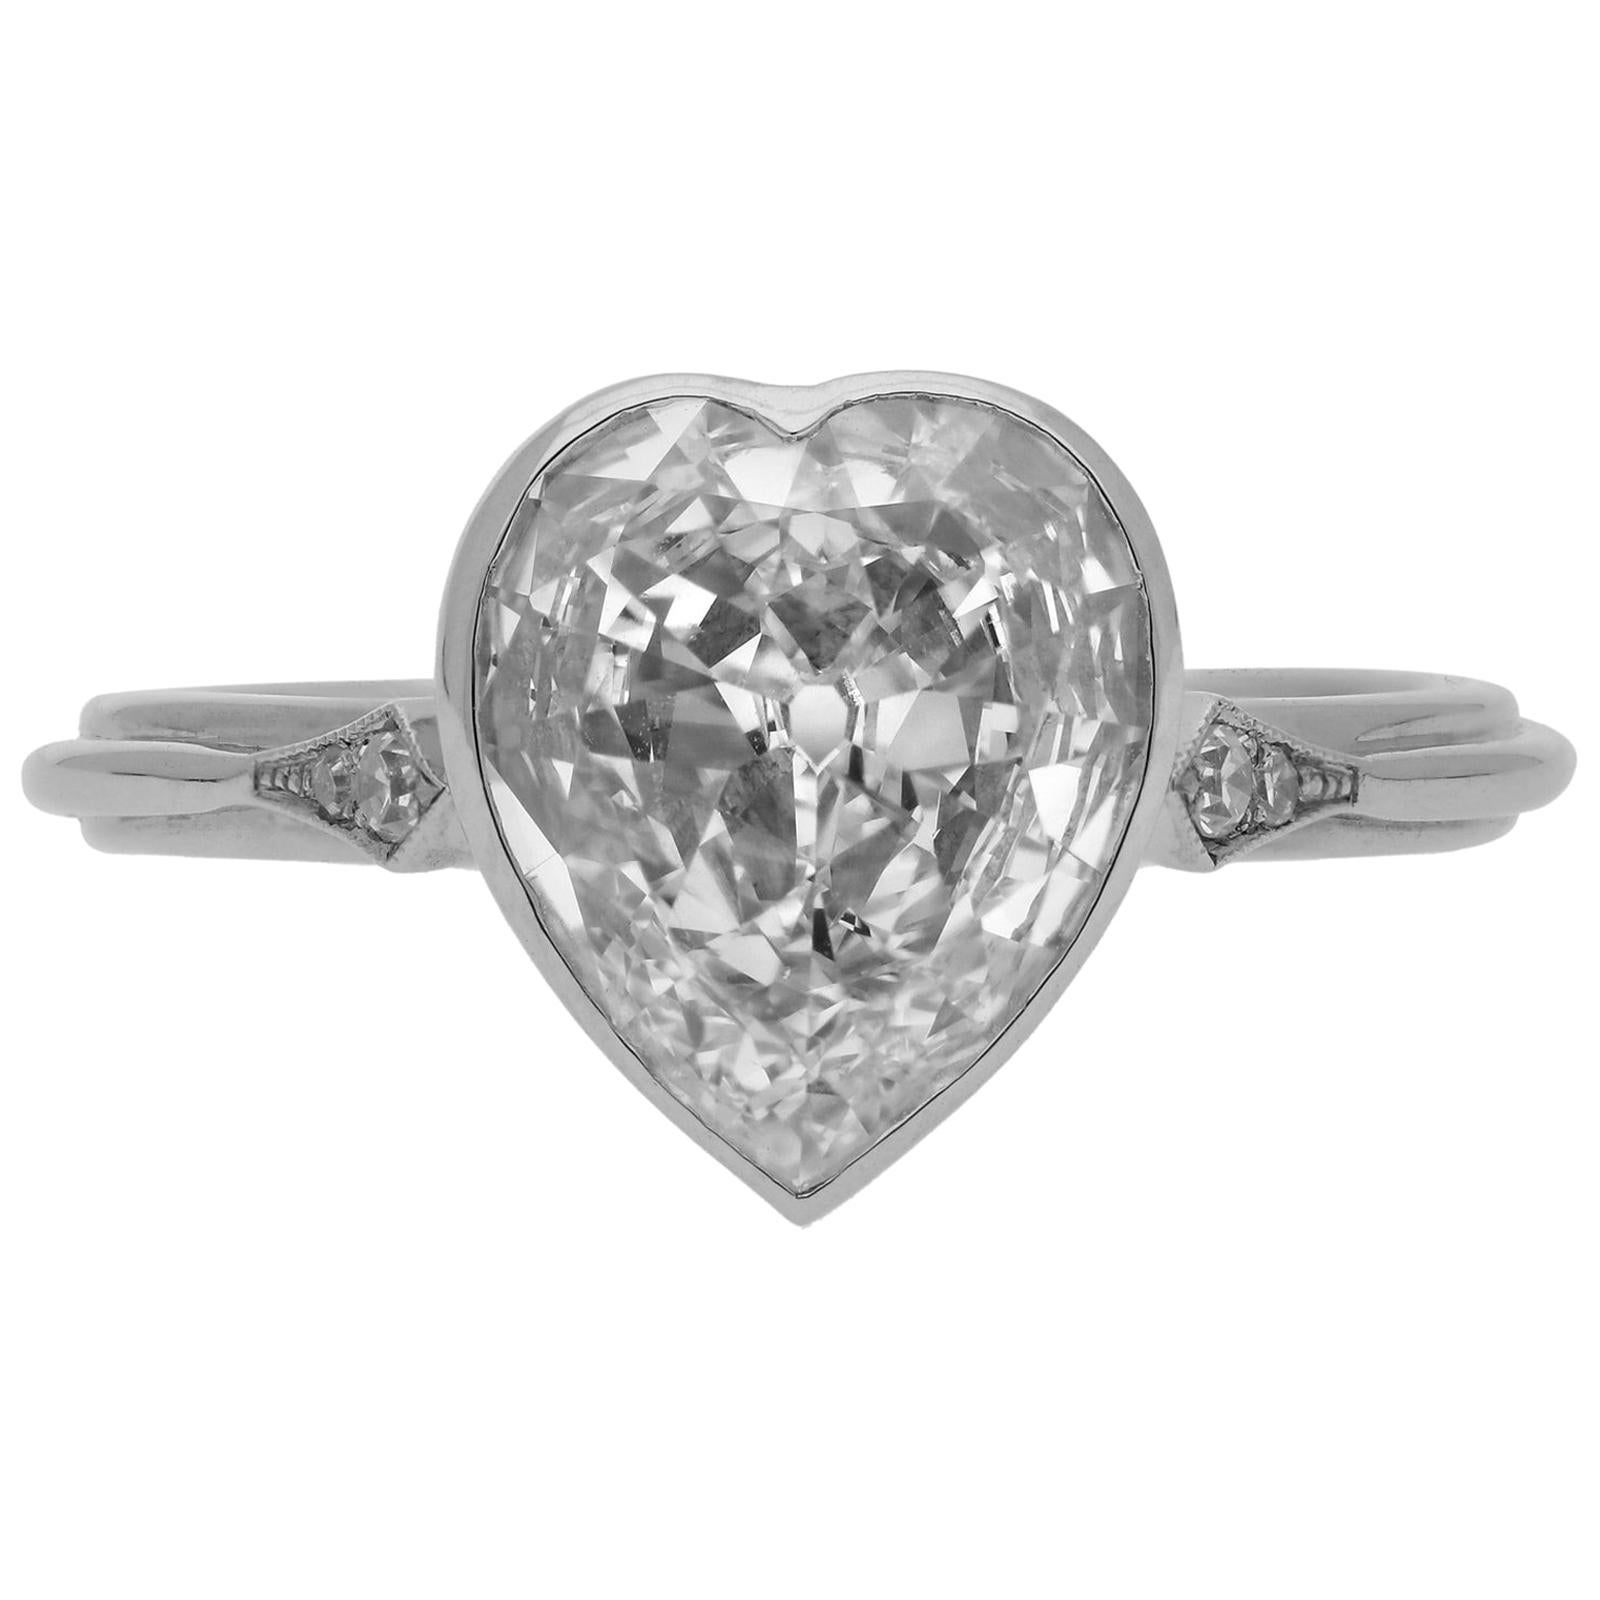 1.72 Carat H VS2 Old Mine Heart-Shaped Cut Diamond Platinum Ring by Hancocks